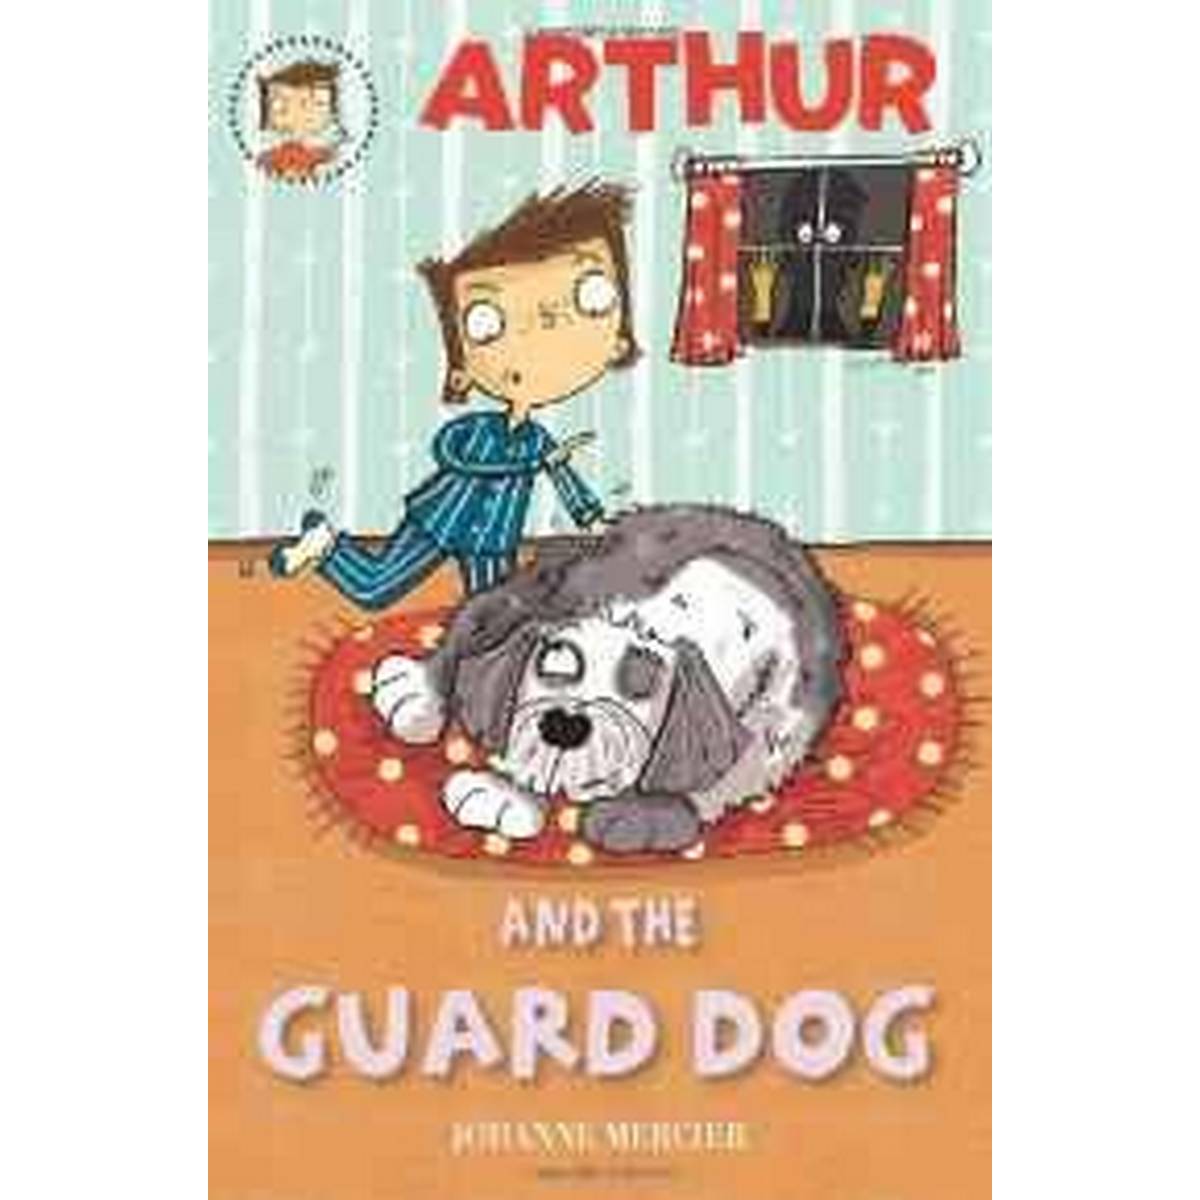 Arthur and the Guard Dog